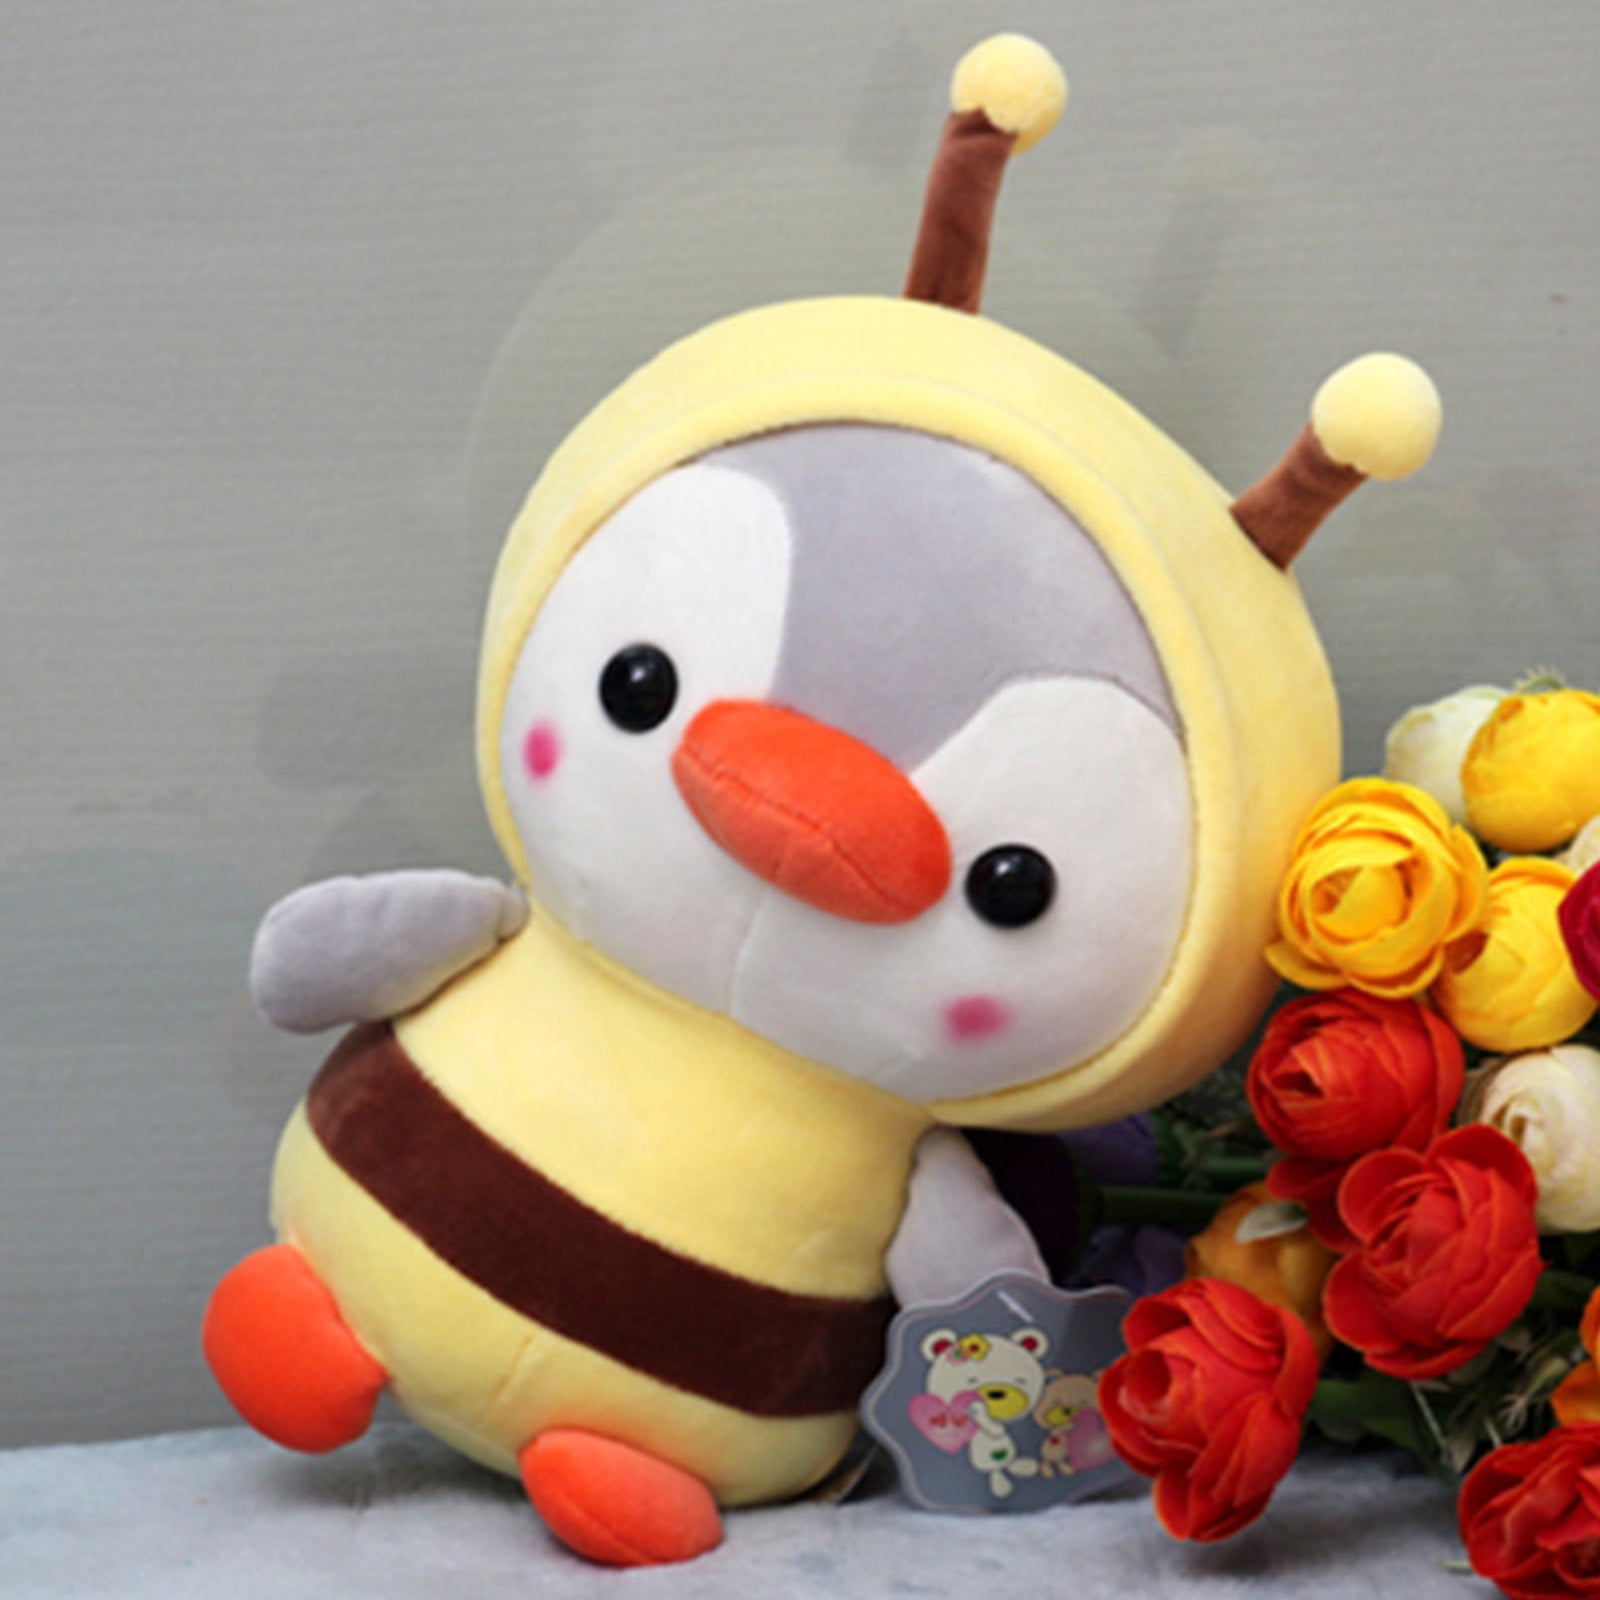 sunyou Cute Penguin Soft Plush Pillow Animal Stuffed Toy 53 x 30 x 